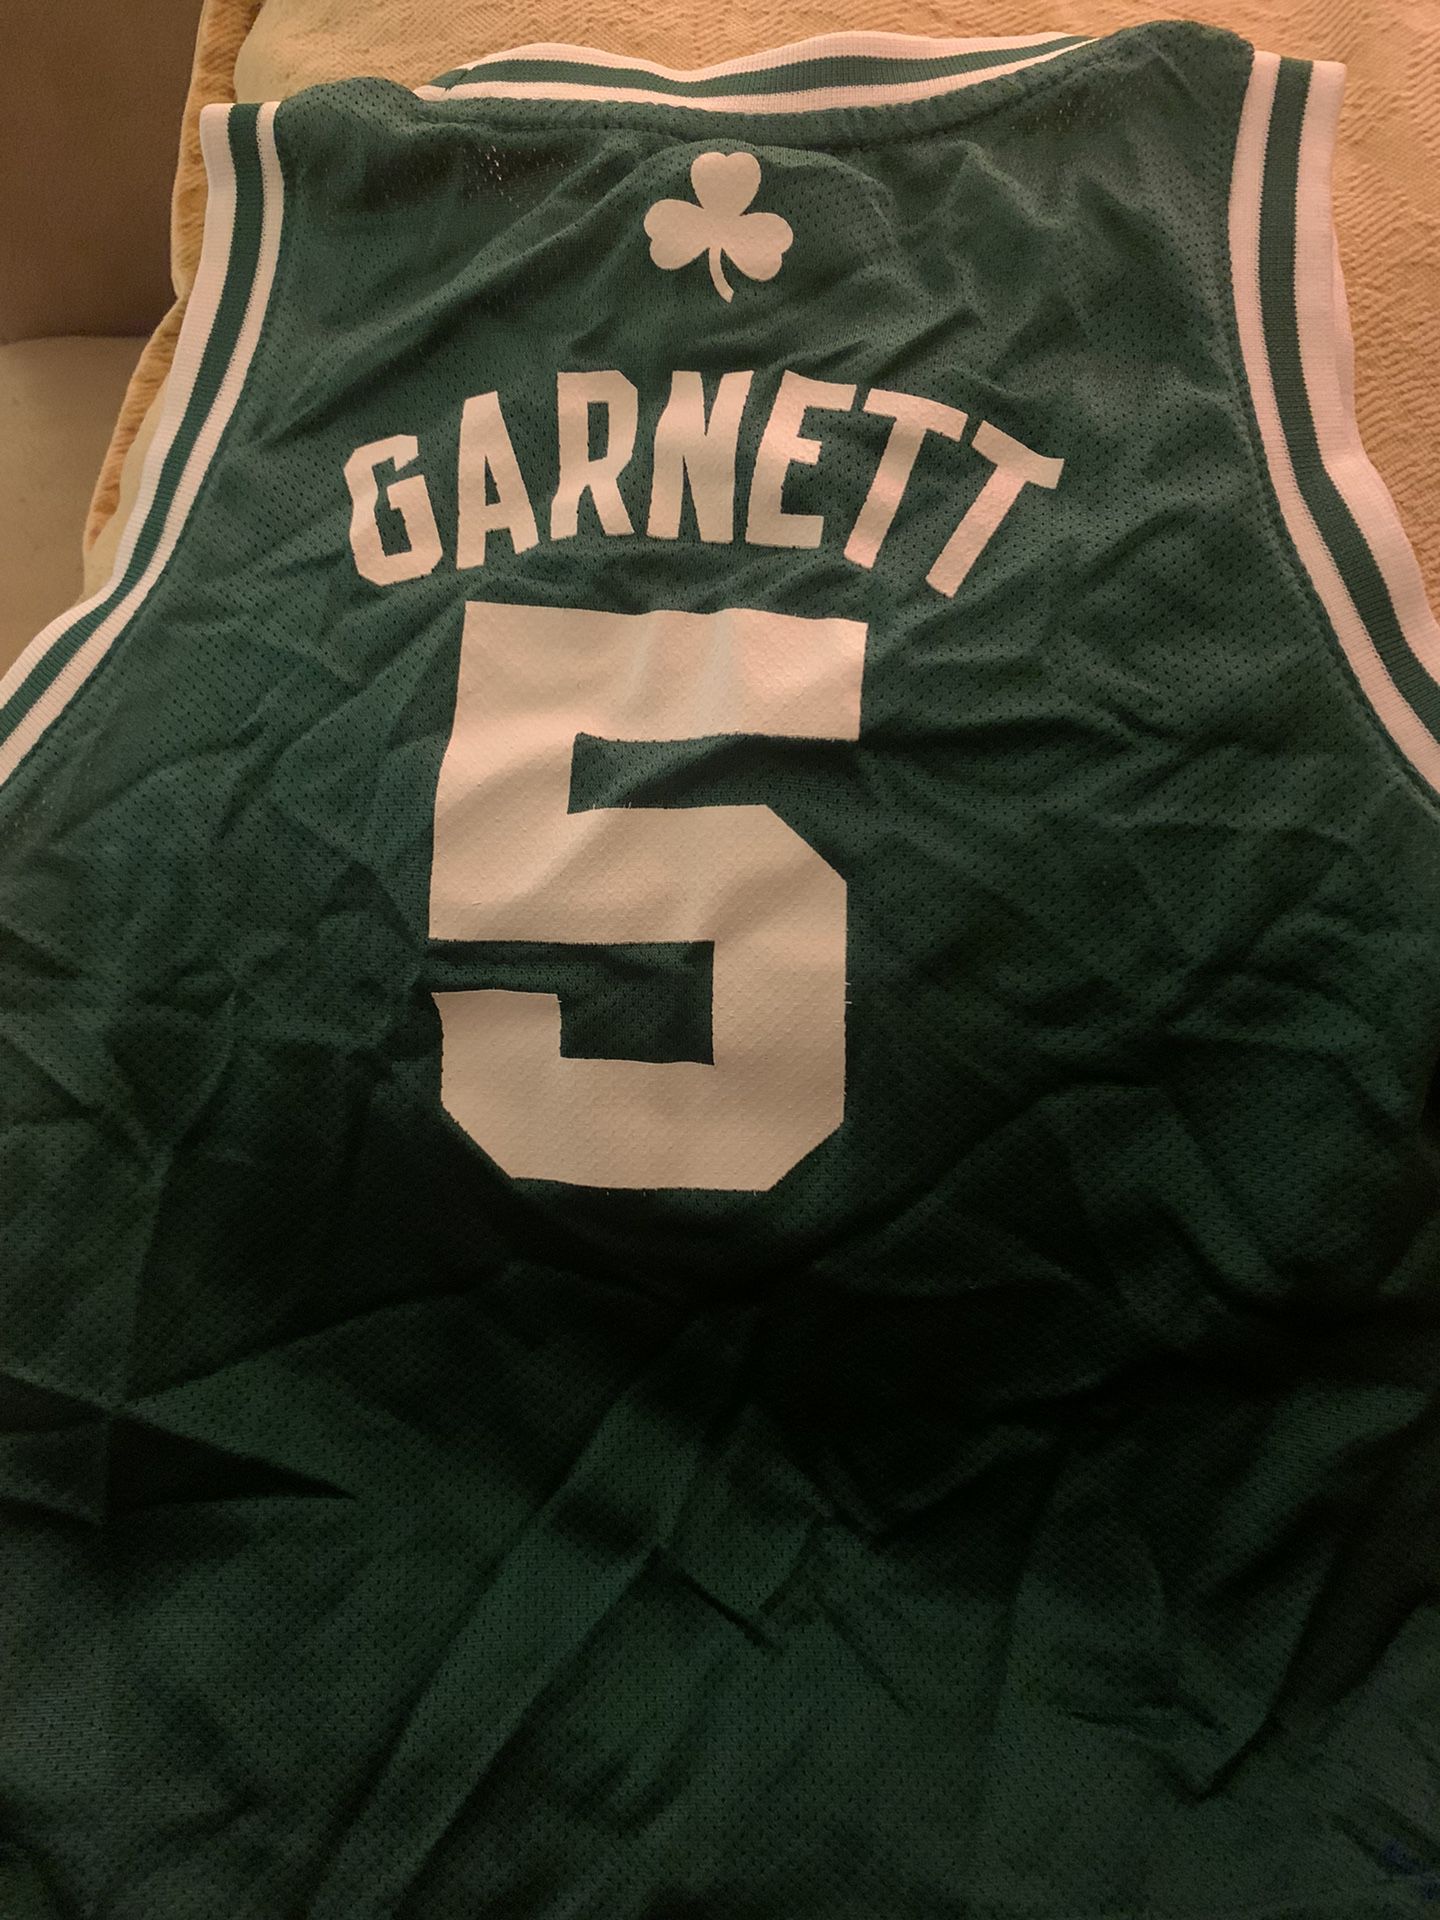 Official NBA Adidas Celtics Jersey Kevin Garnett. Toddler size 2